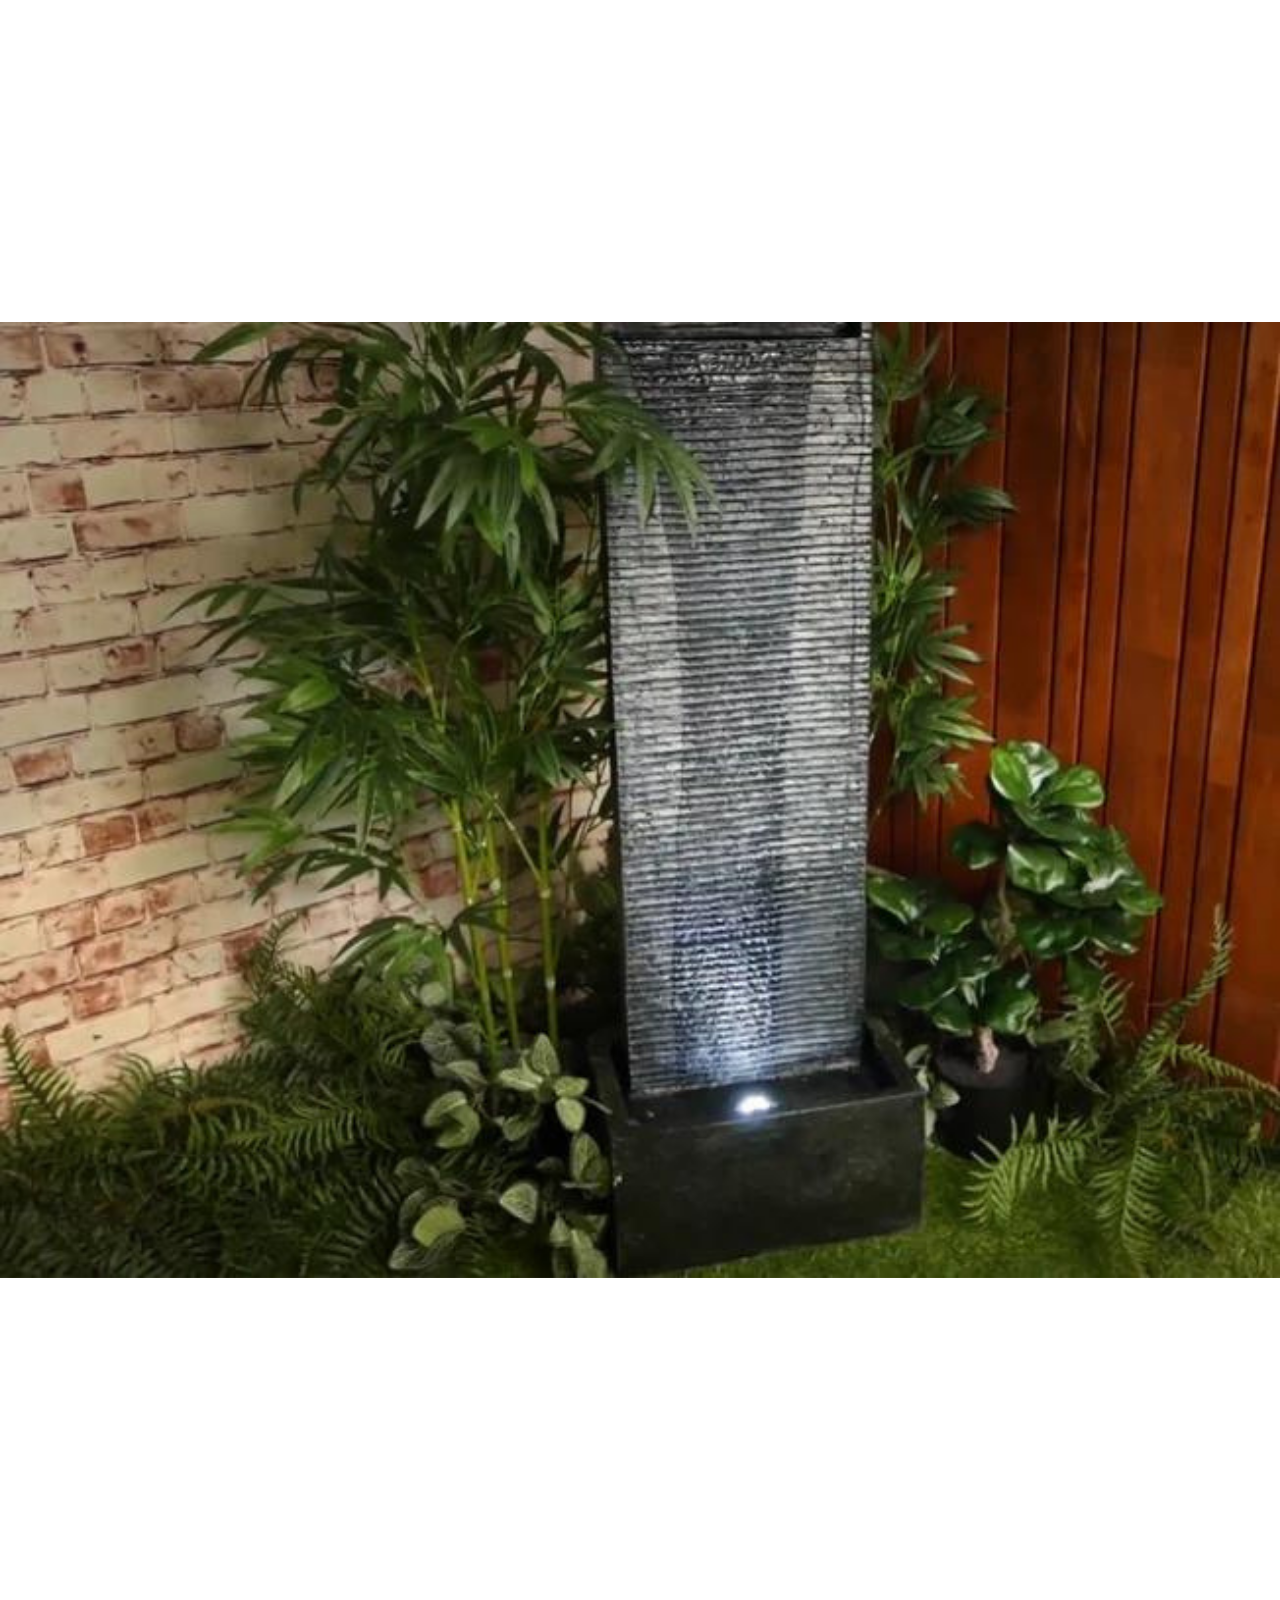 Frolic - Modern Wall Waterfall Lighting Water Feature 100cm